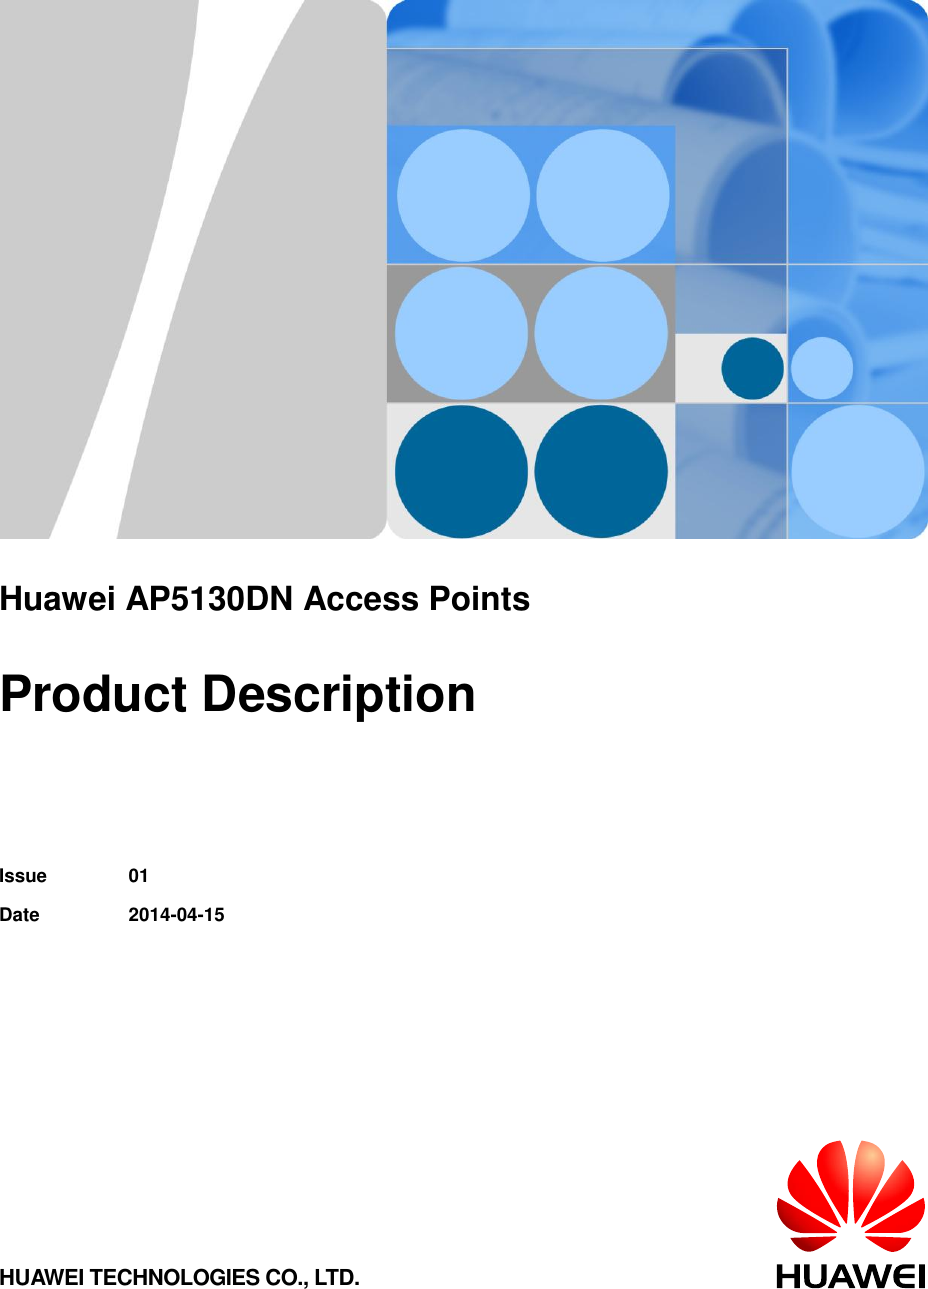         Huawei AP5130DN Access Points  Product Description   Issue 01 Date 2014-04-15 HUAWEI TECHNOLOGIES CO., LTD. 